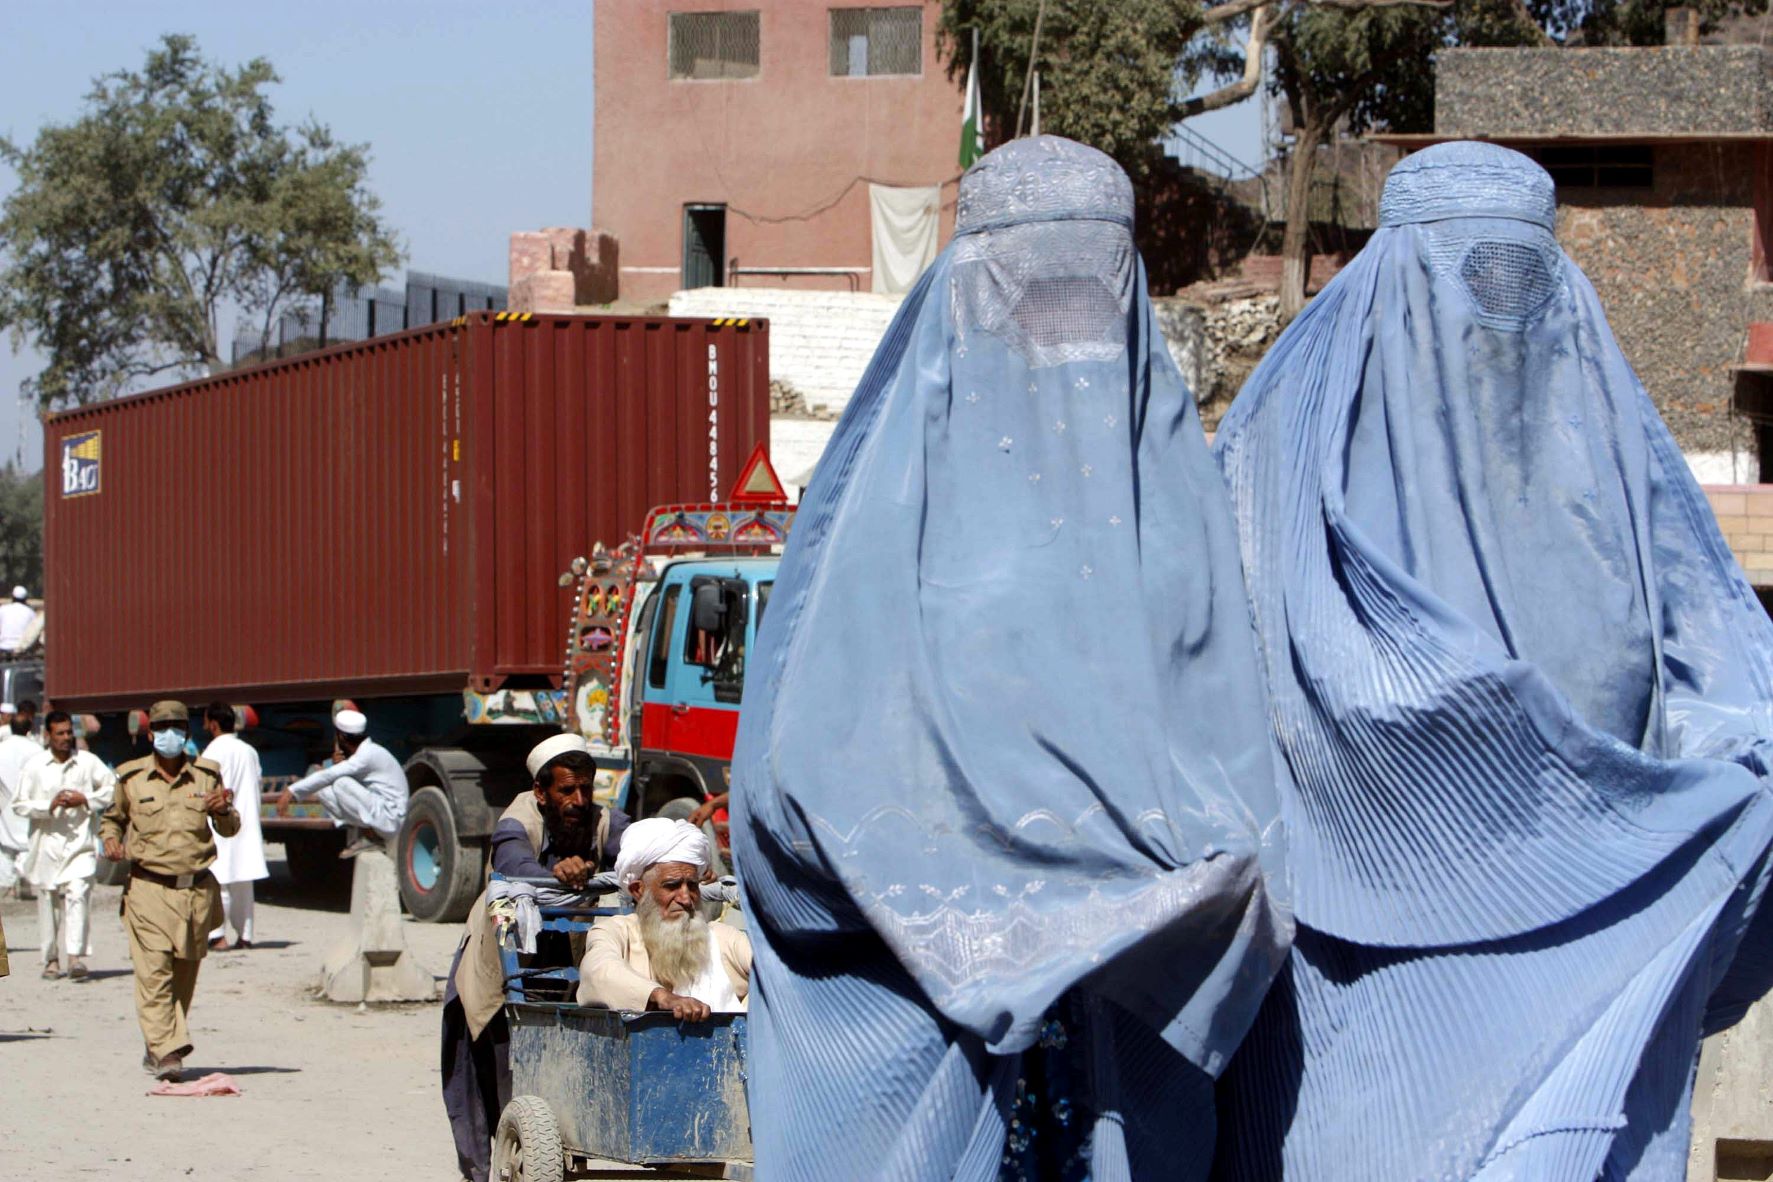 20211013-image-mb-dpa-Frauen in Afghanistan